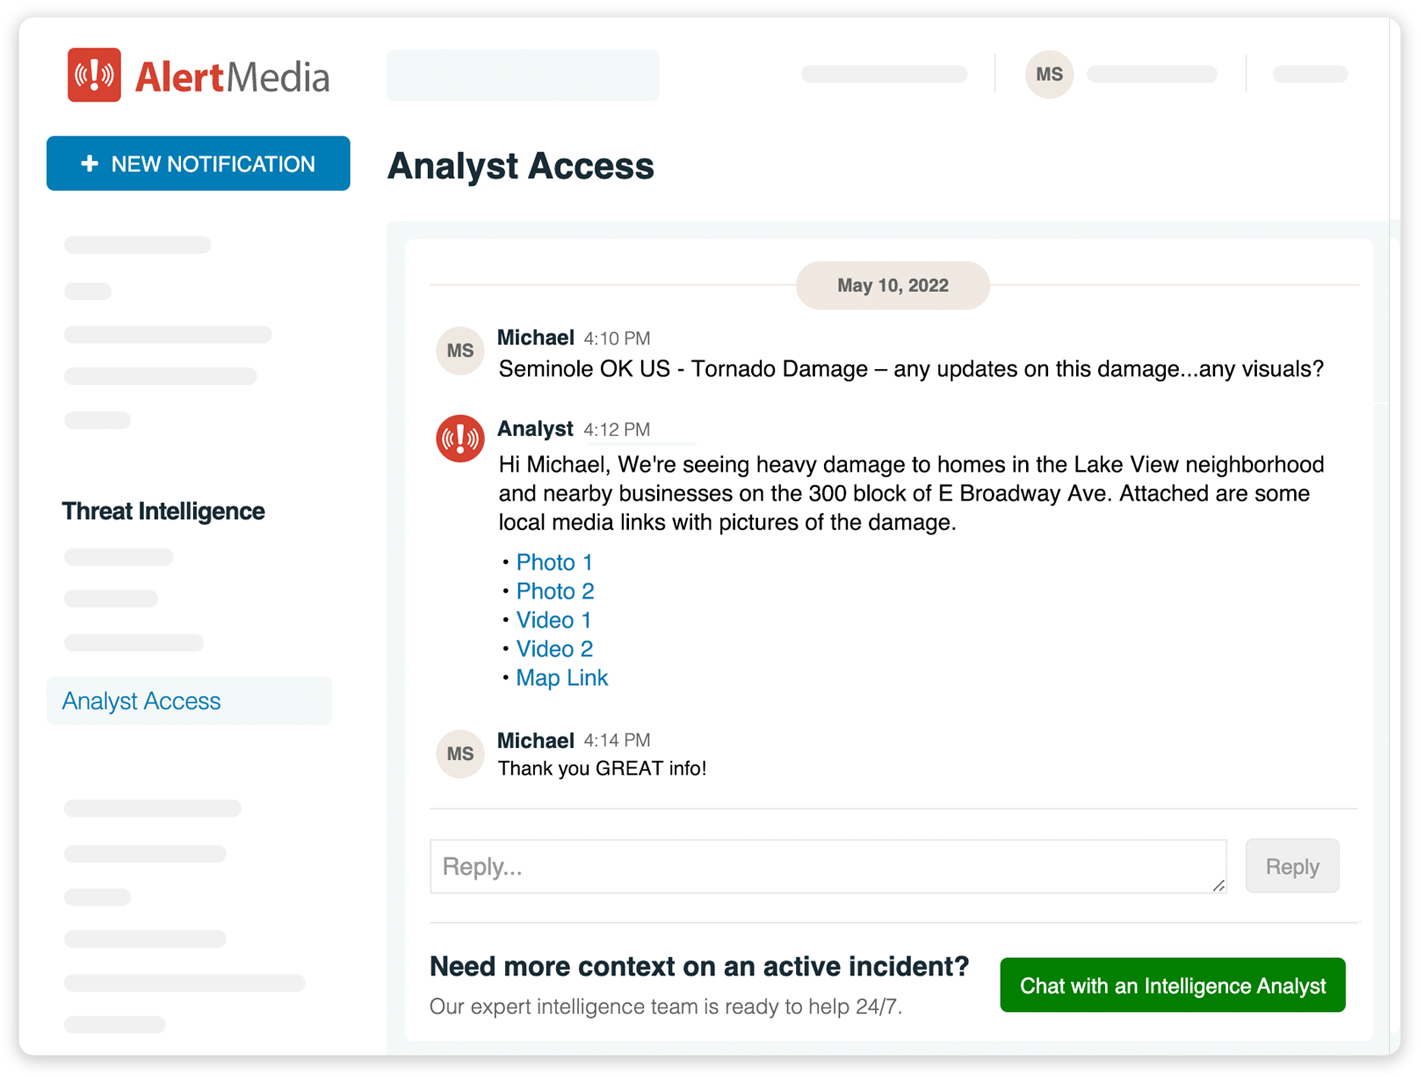 screenshot of AlertMedia's analyst access feature